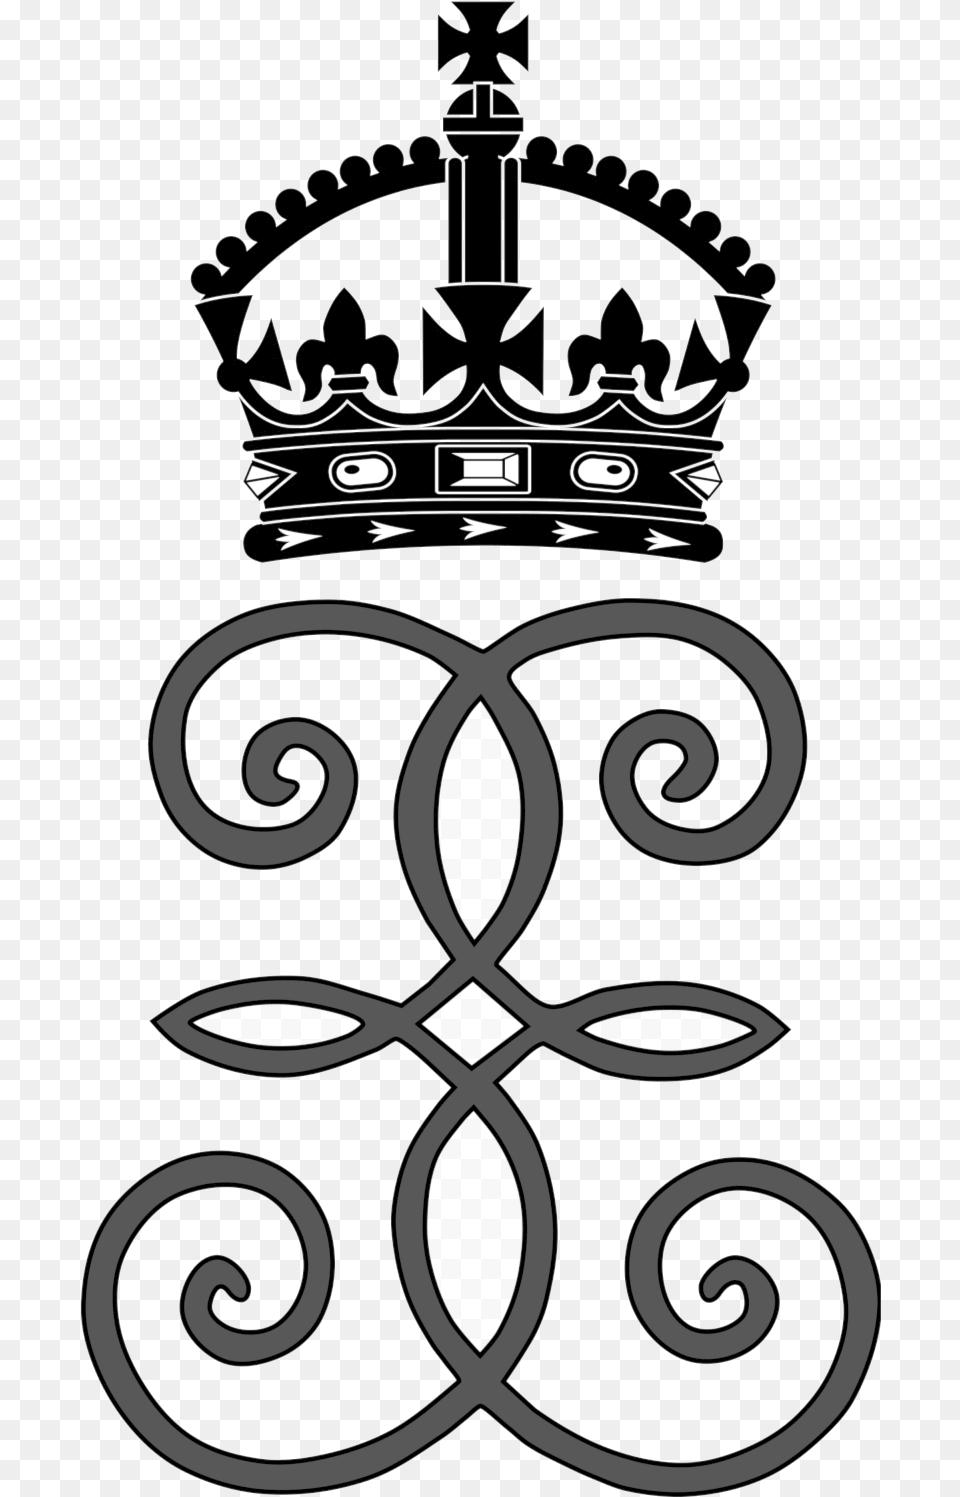 Queen Crown Royal Vector Clipart Transparent Queen Elizabeth Royal Monogram, Accessories, Jewelry, Emblem, Symbol Png Image